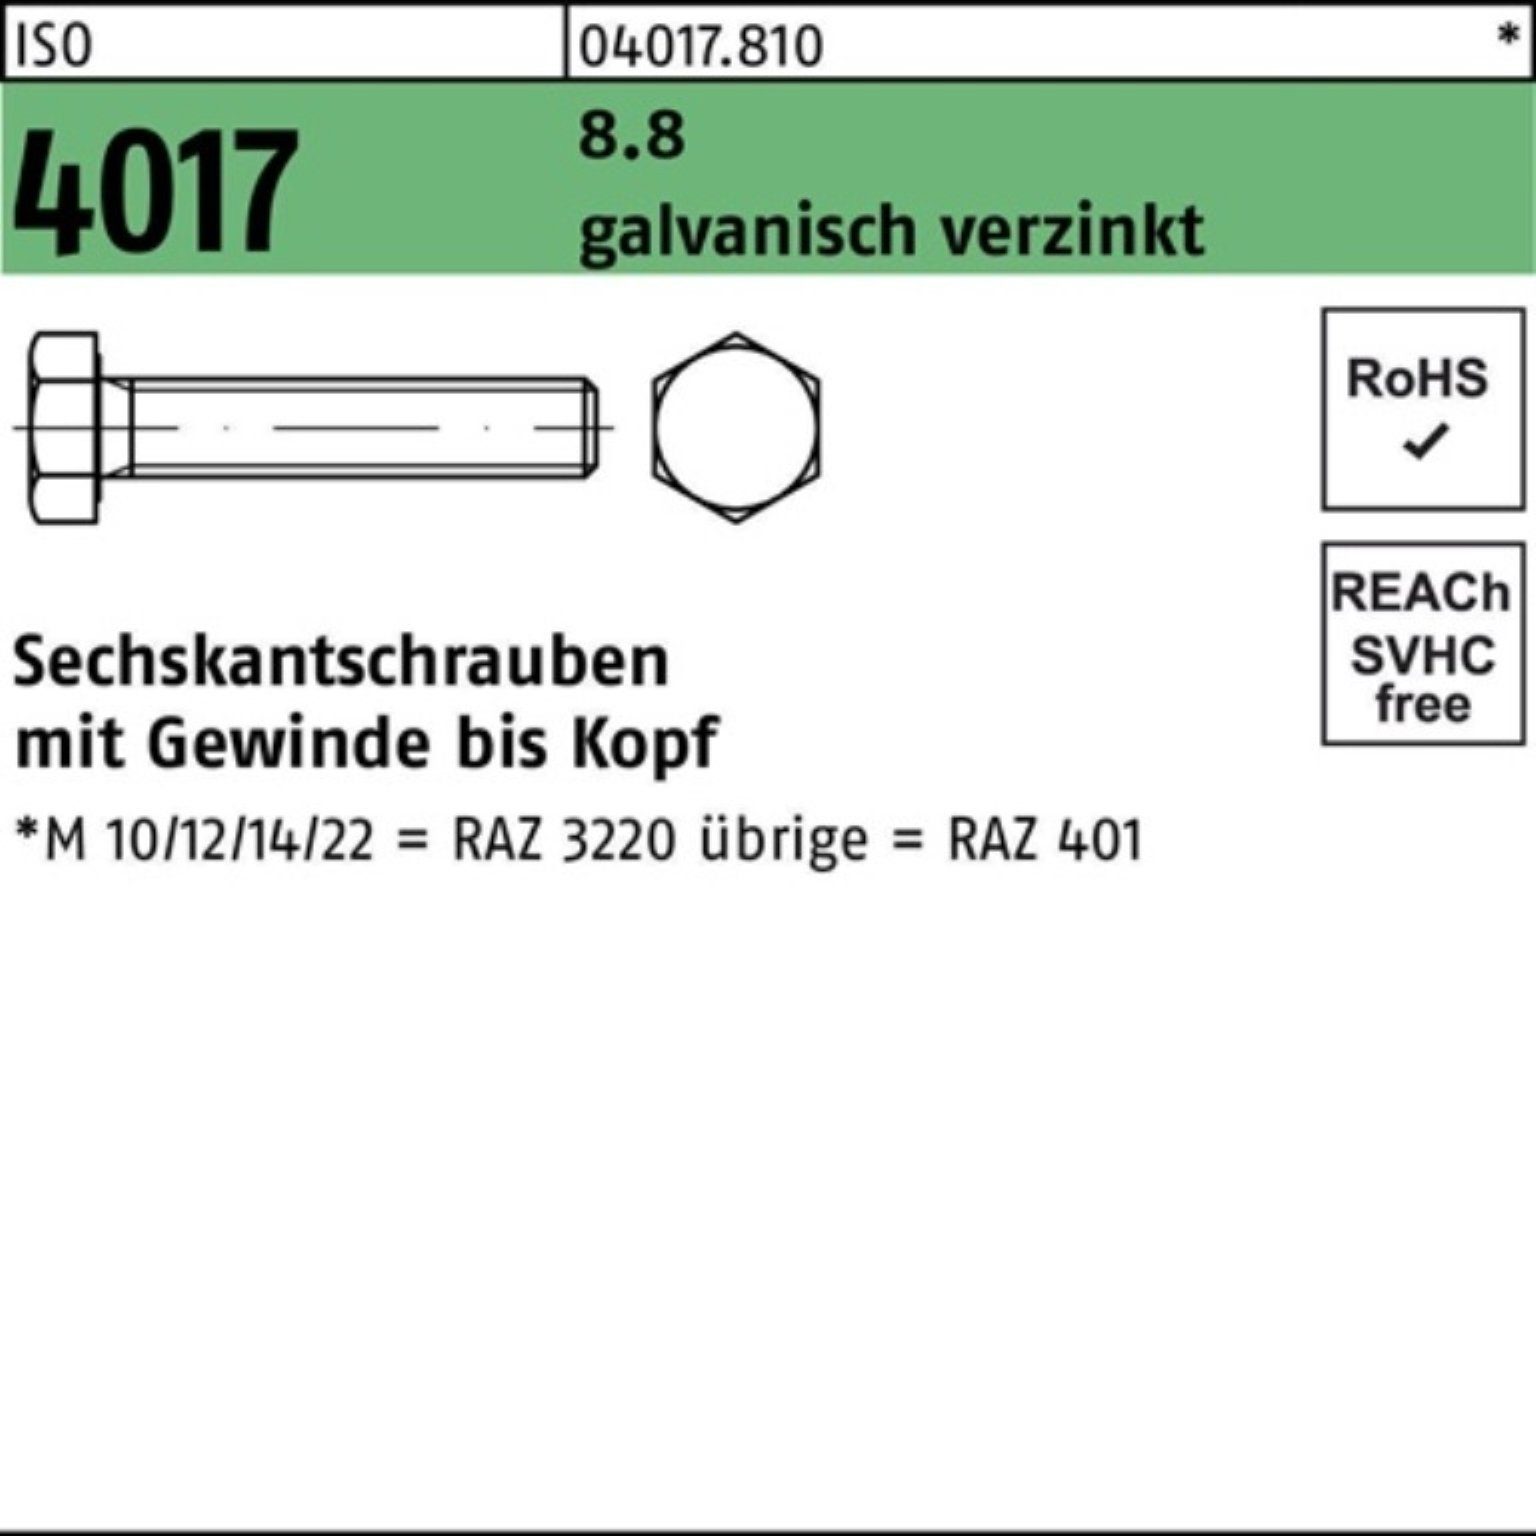 Pack Sechskantschraube VG Bufab galv.verz. 4017 25 M24x ISO St Sechskantschraube 100er 25 8.8